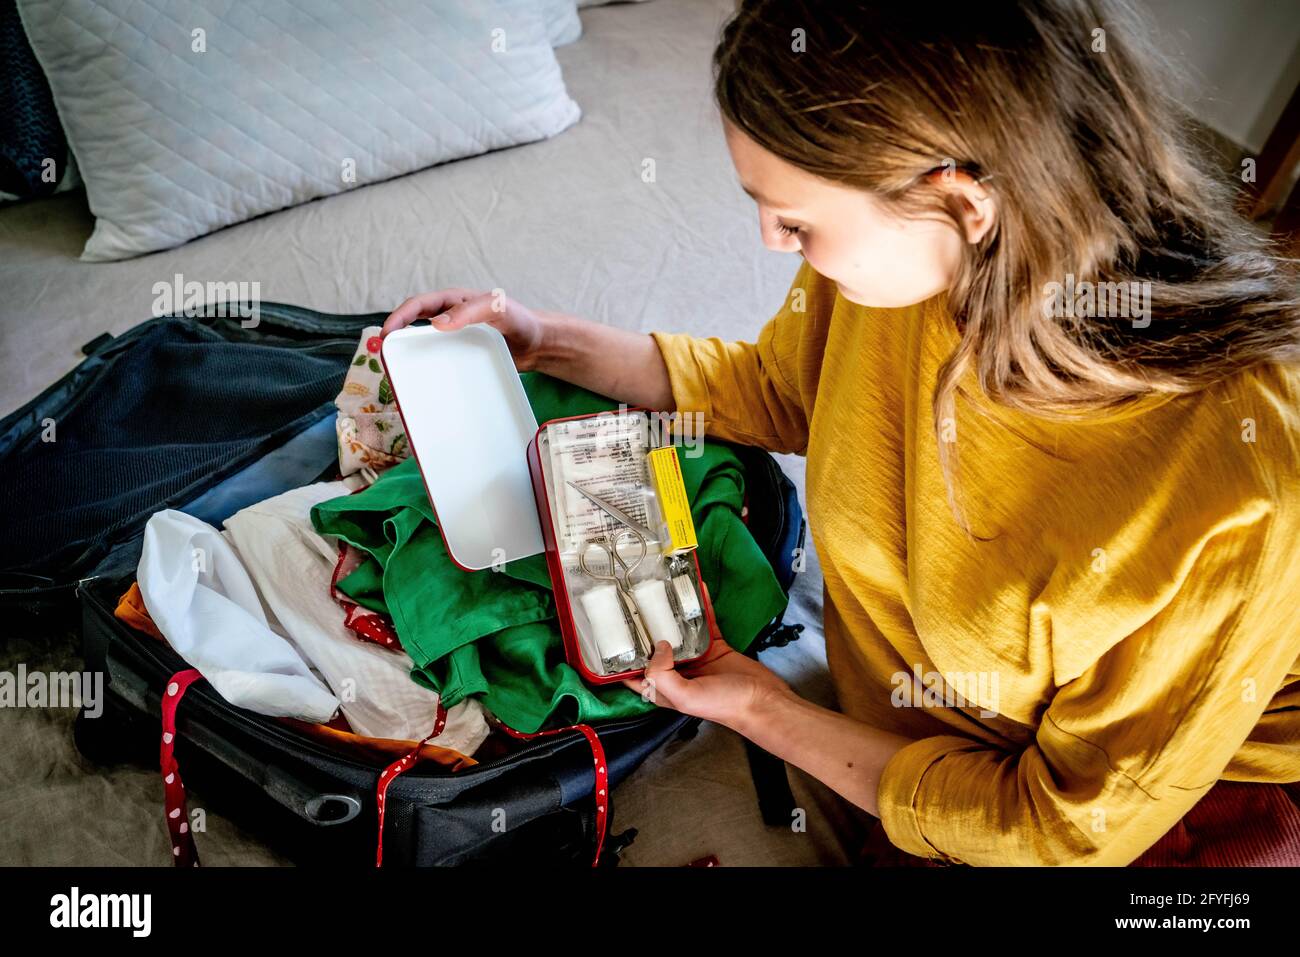 Woman preparing first aid kit. Stock Photo